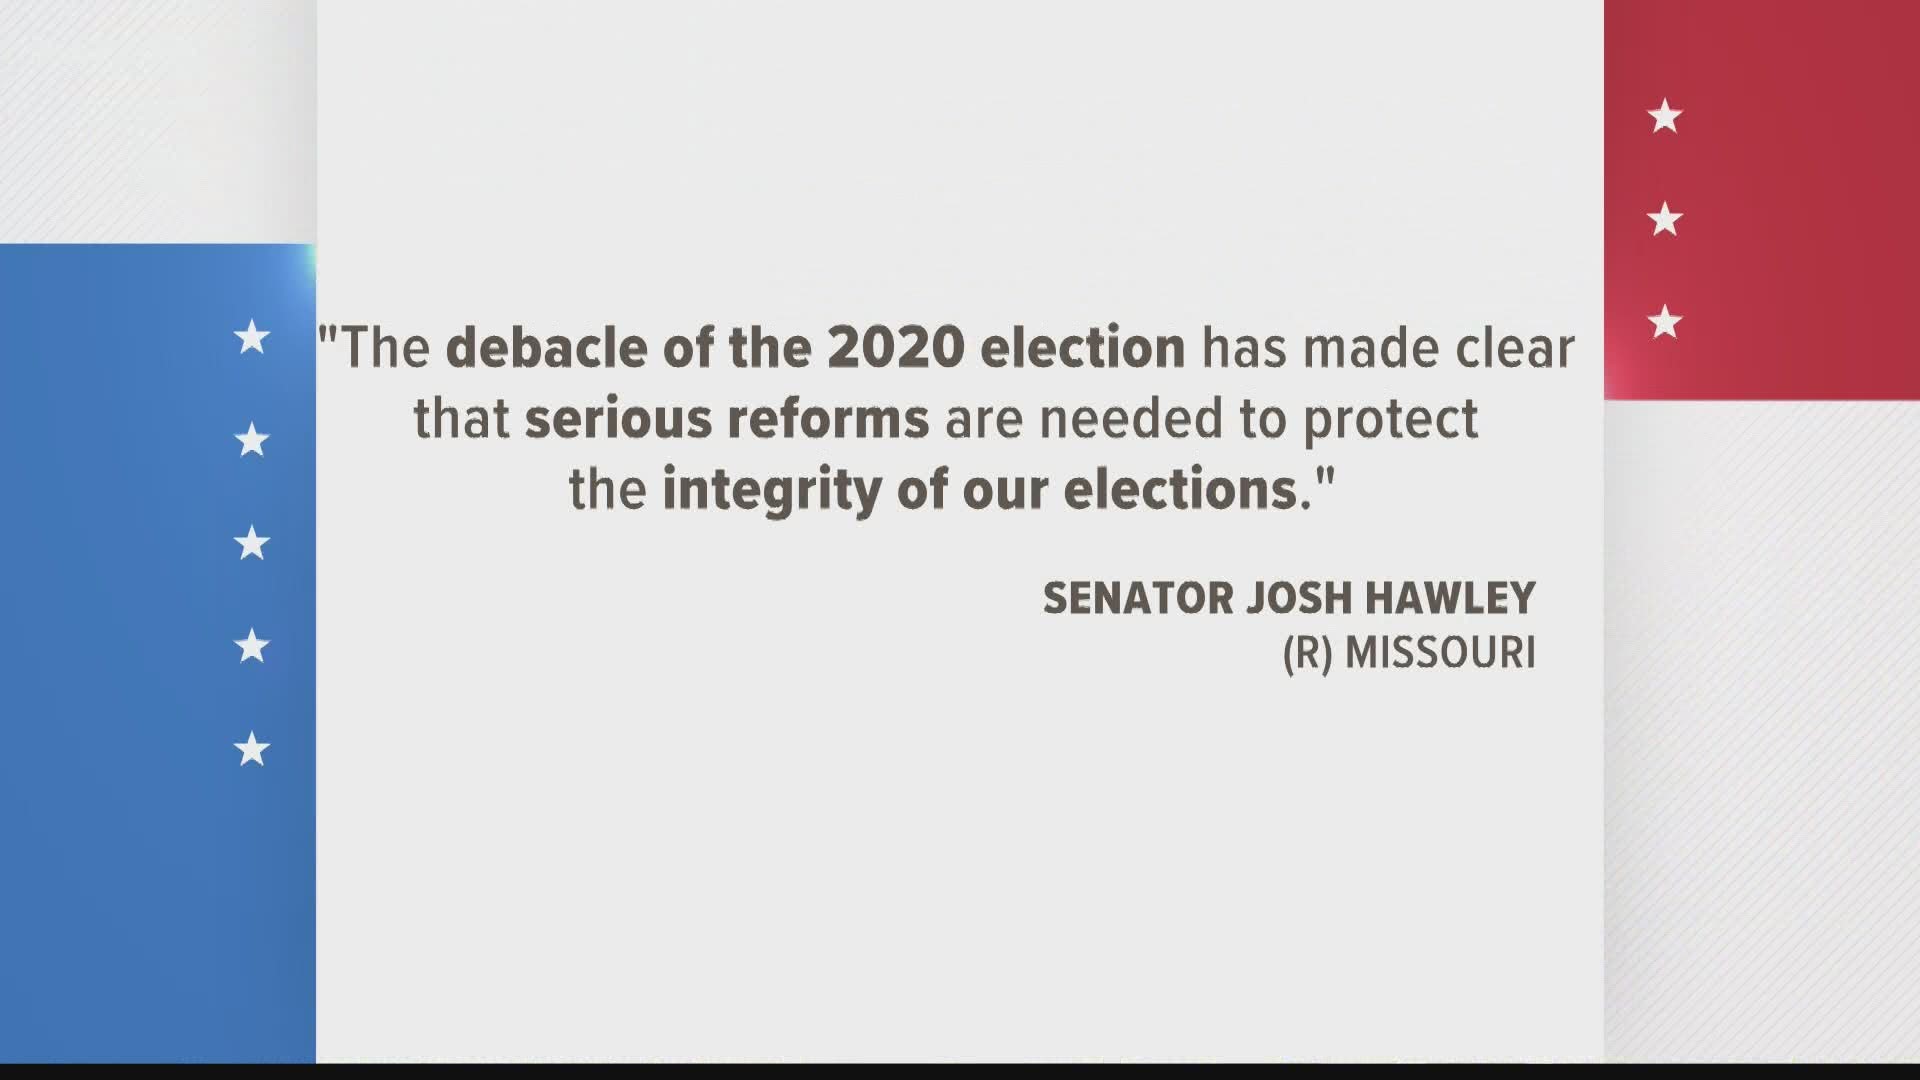 Missouri Senator Josh Hawley introduced this legislation